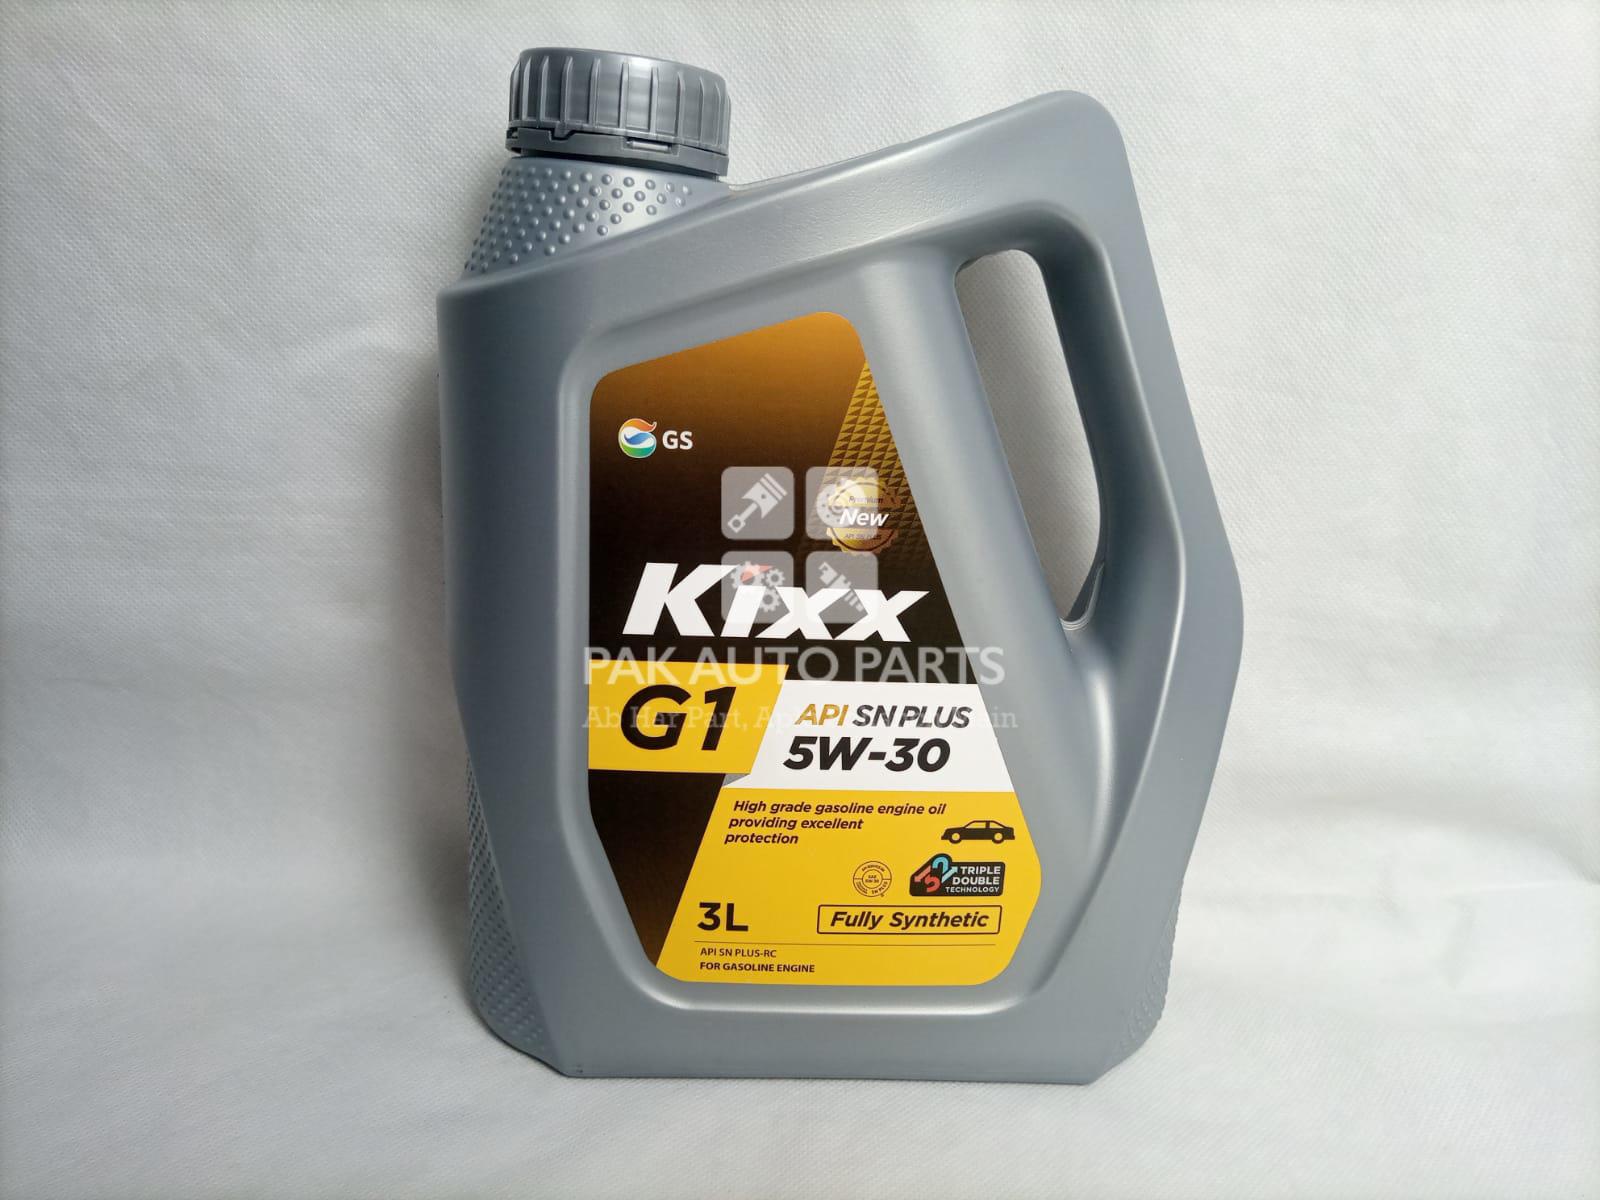 Kixx G1 API SN PLUS 5W-30 (3L) High grade gasoline engine oil providing .